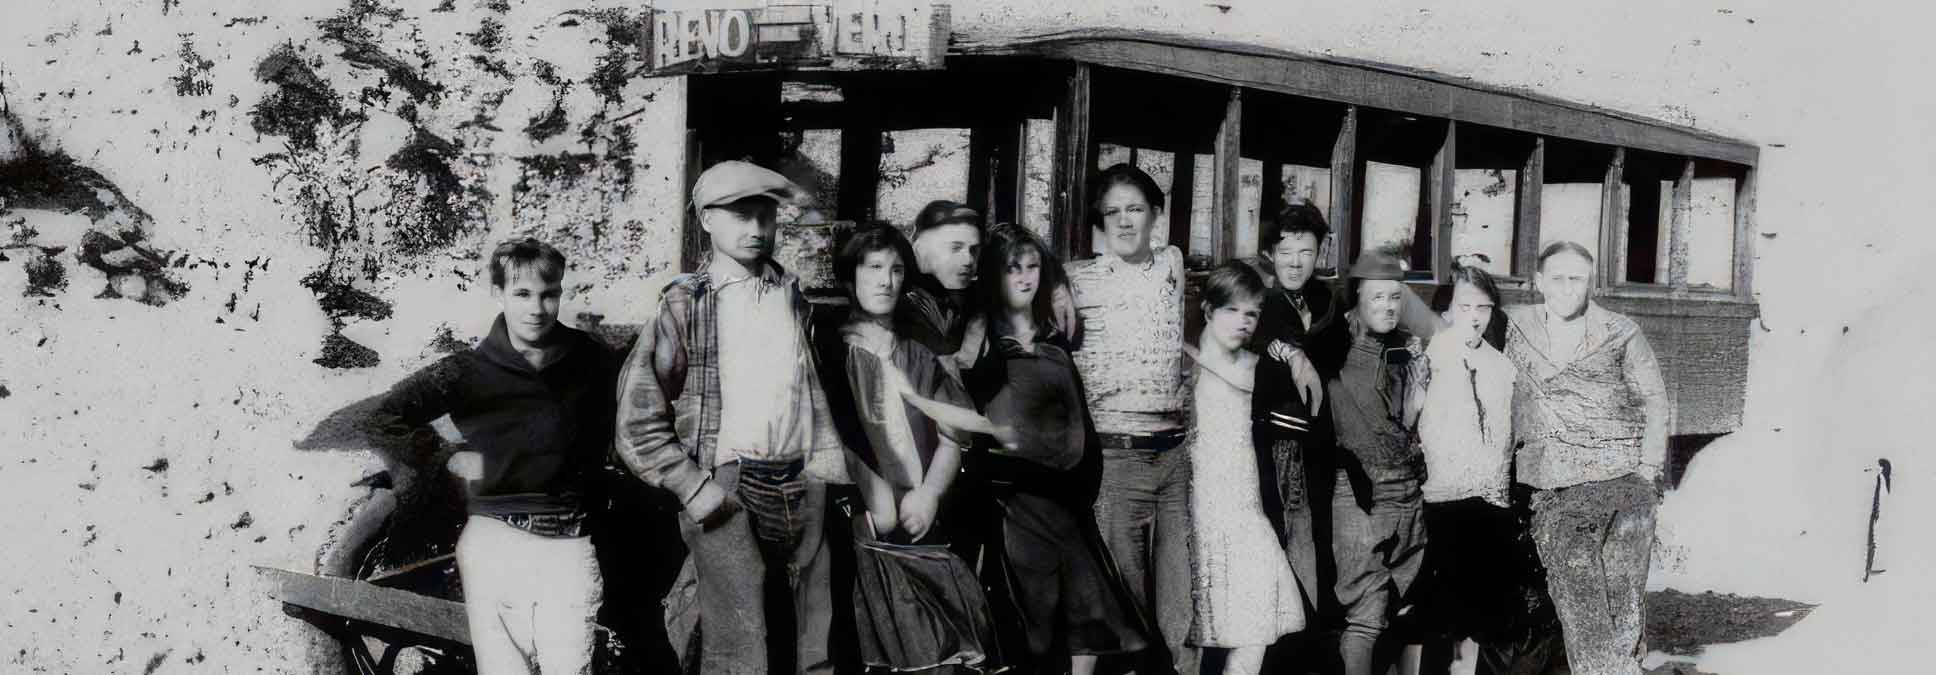 1926 Verdi Public School-First School Bus